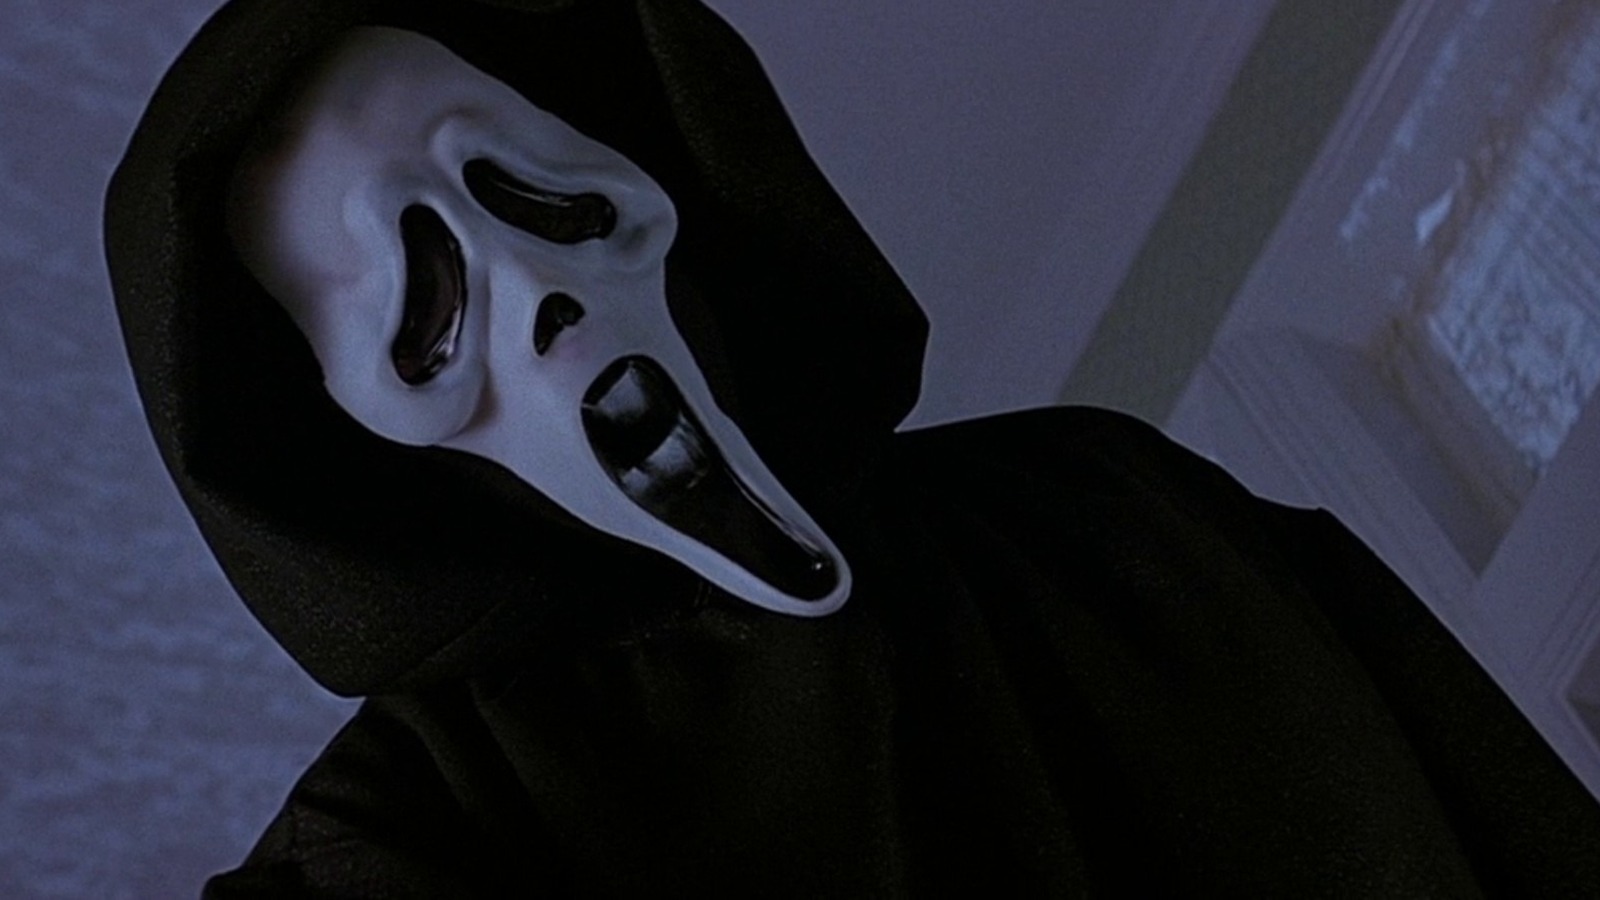 Scream 6' Writers Both Had Same Idea for Opening Kill